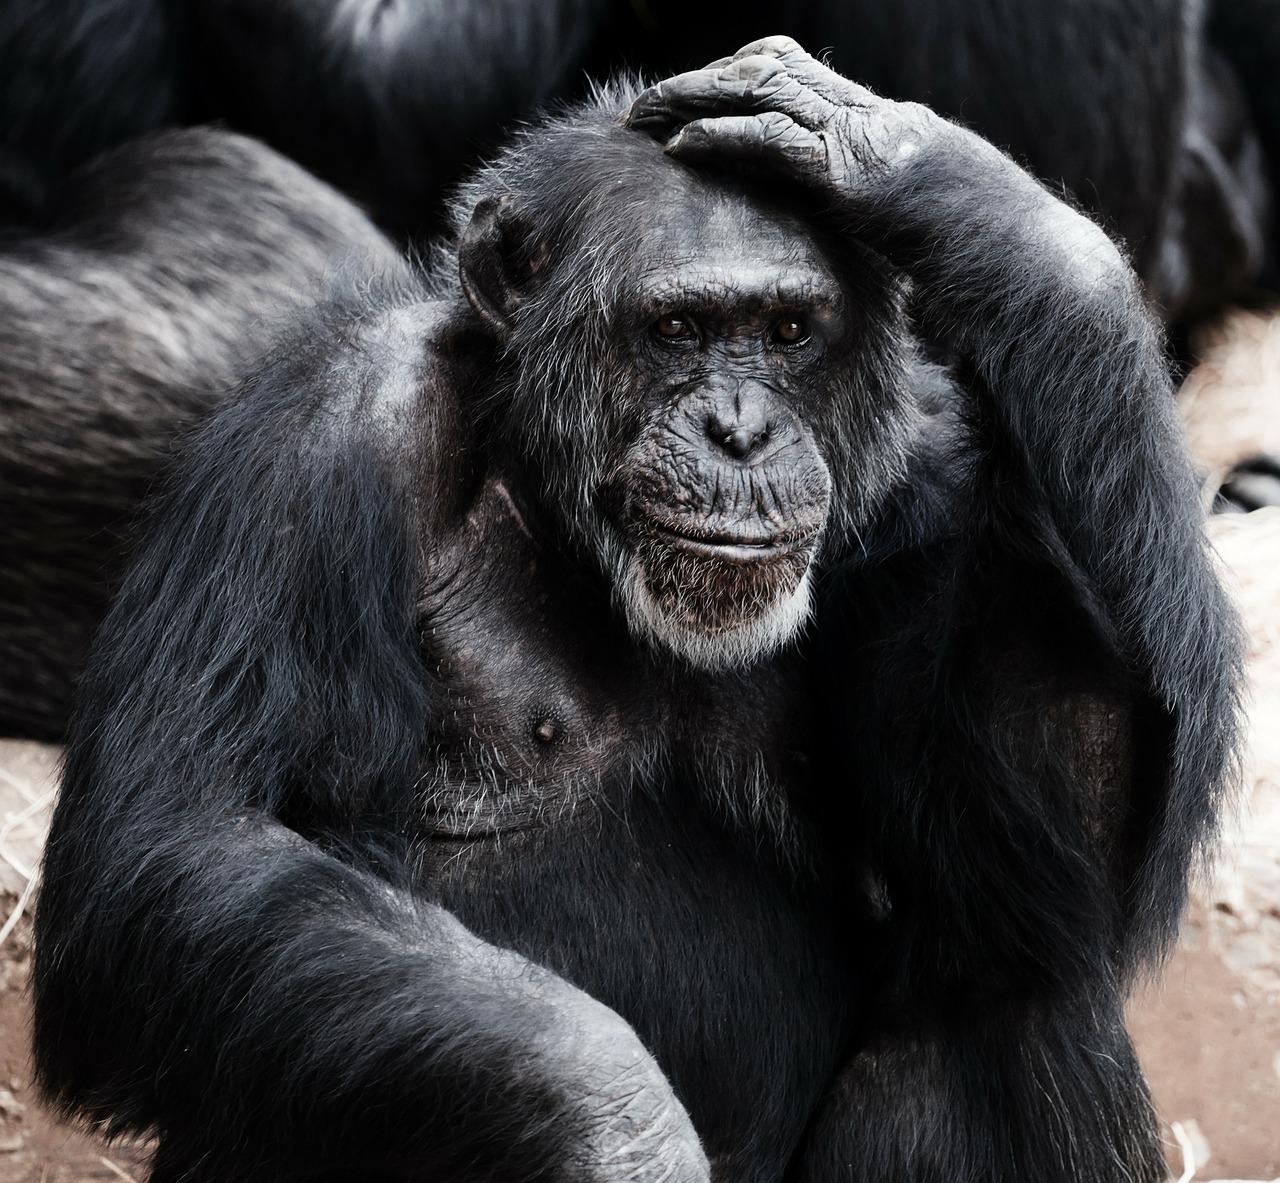 Ape Thinking?